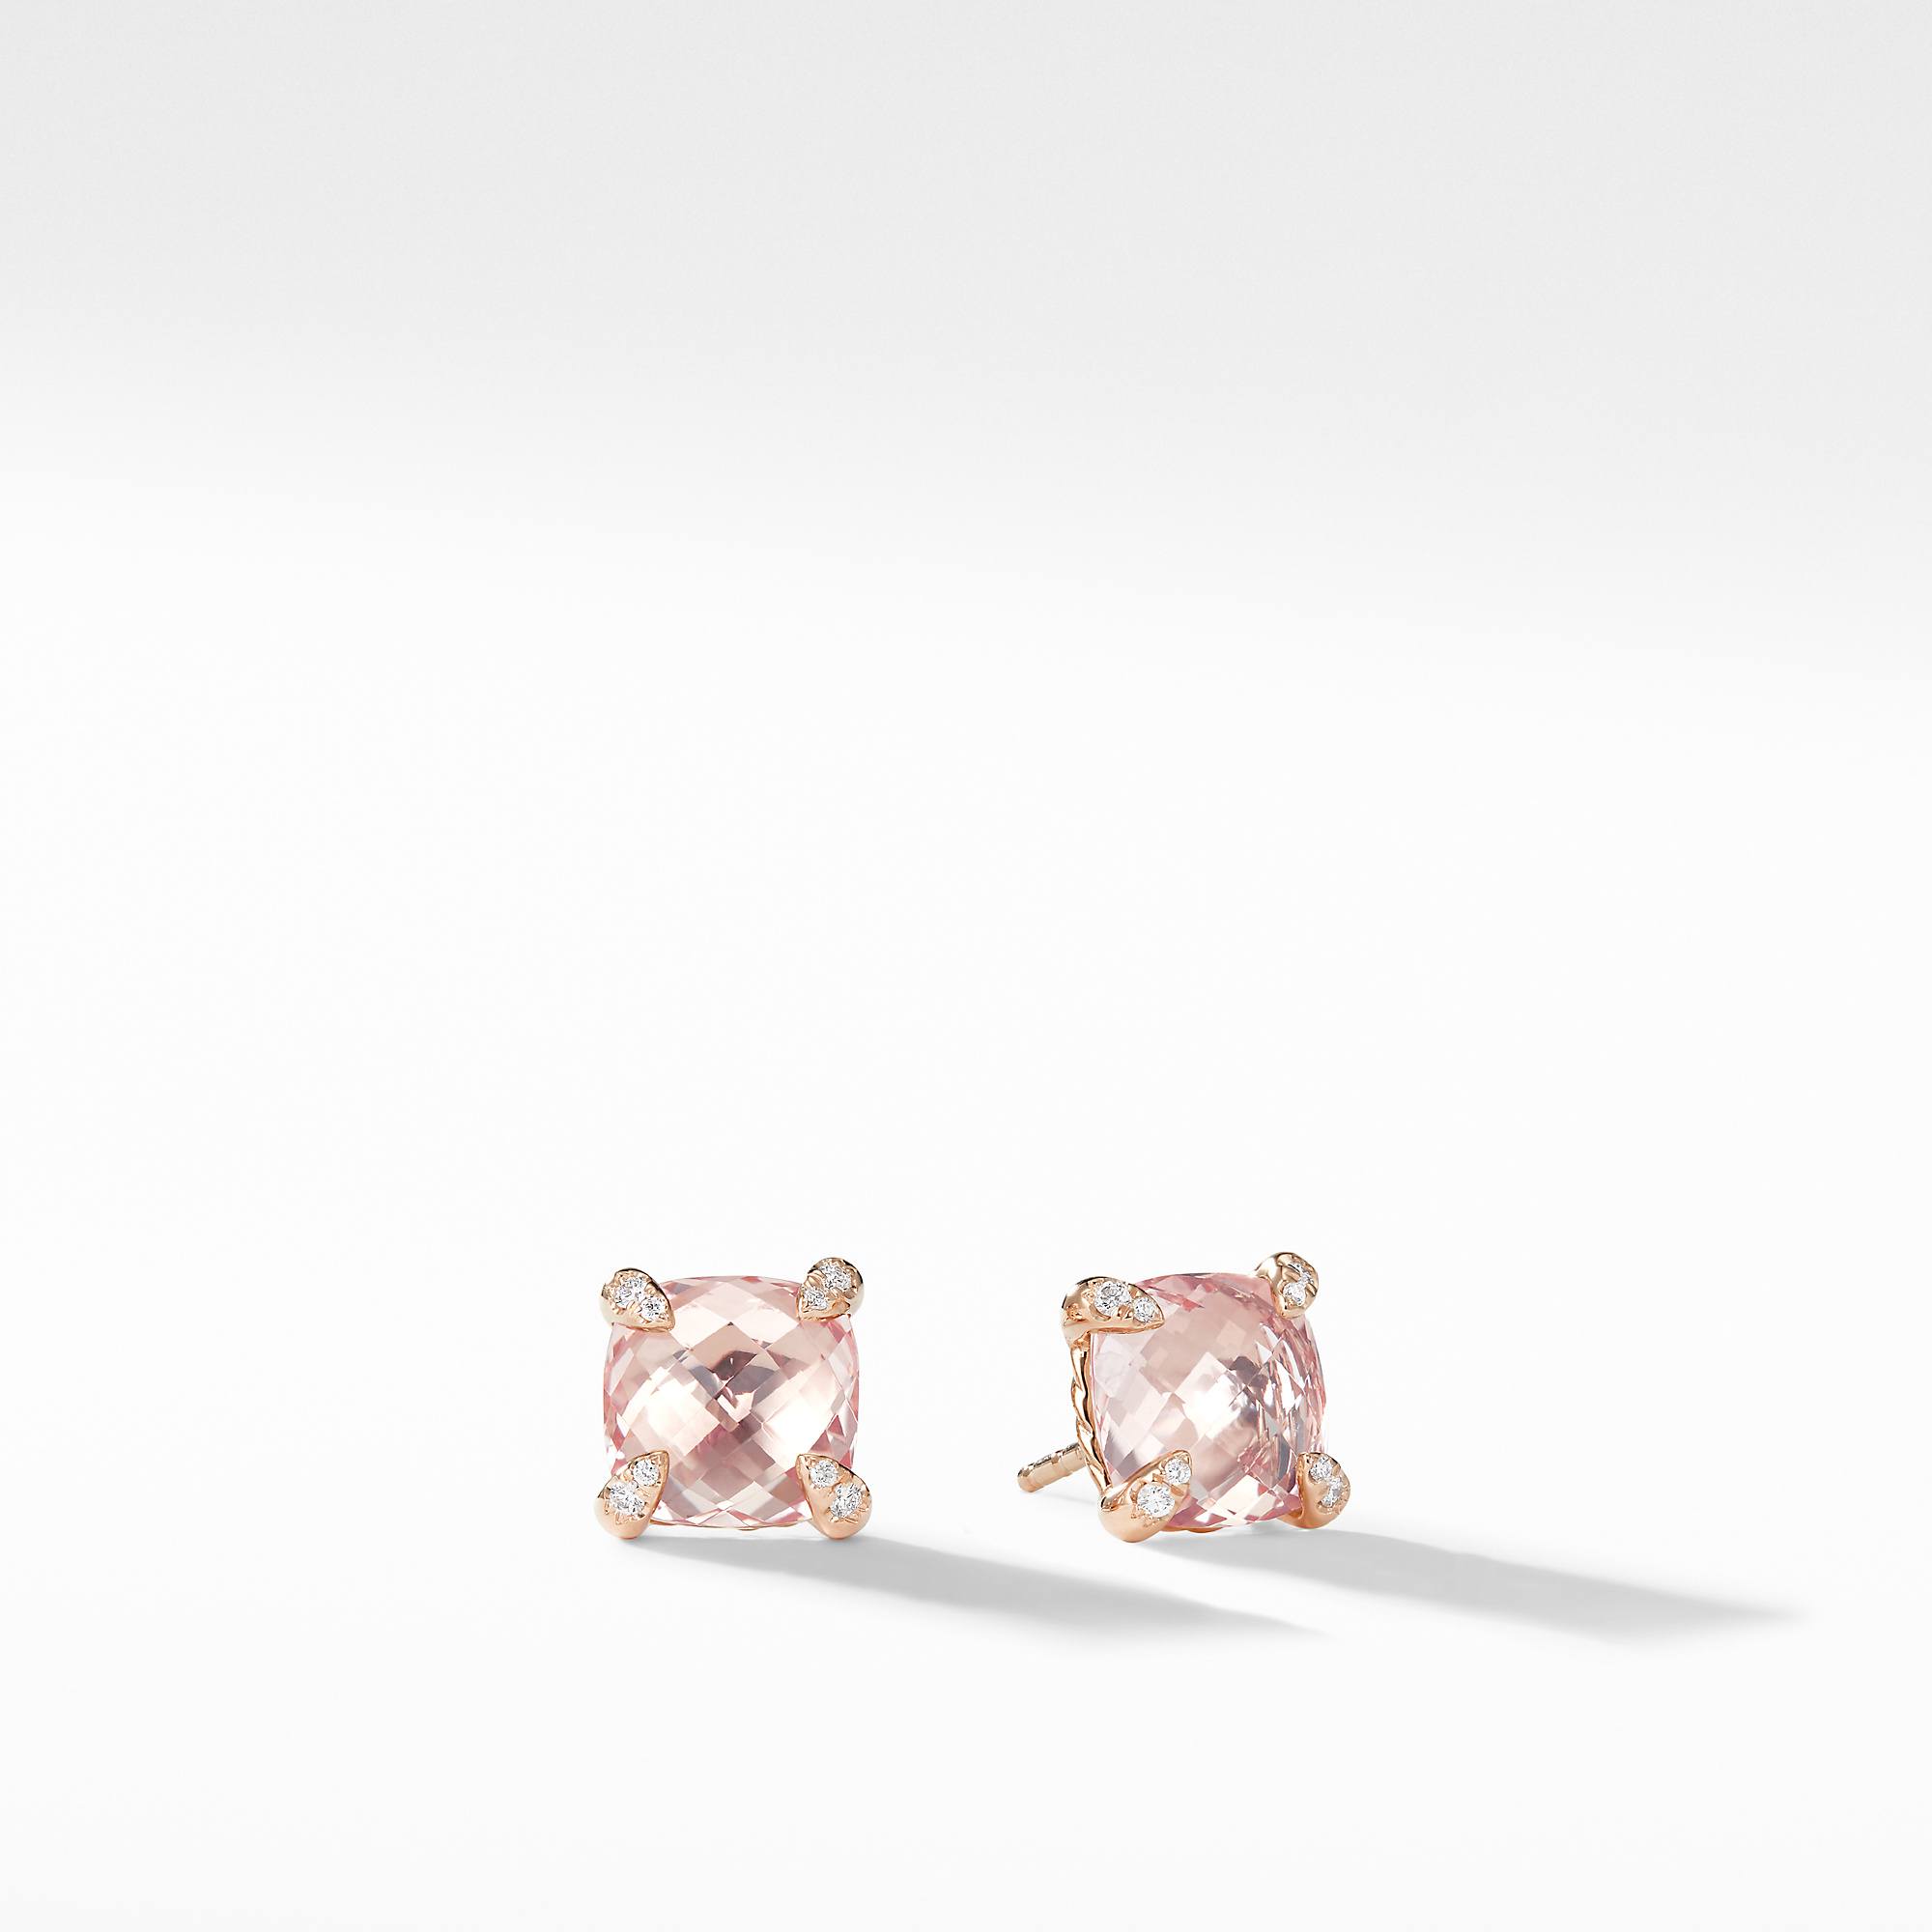 David Yurman Chatelaine Stud Earrings with Morganite and Diamonds in 18K Rose Gold 0